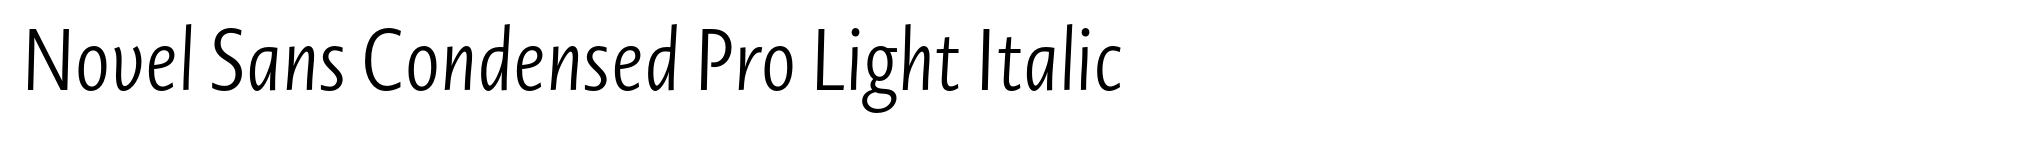 Novel Sans Condensed Pro Light Italic image